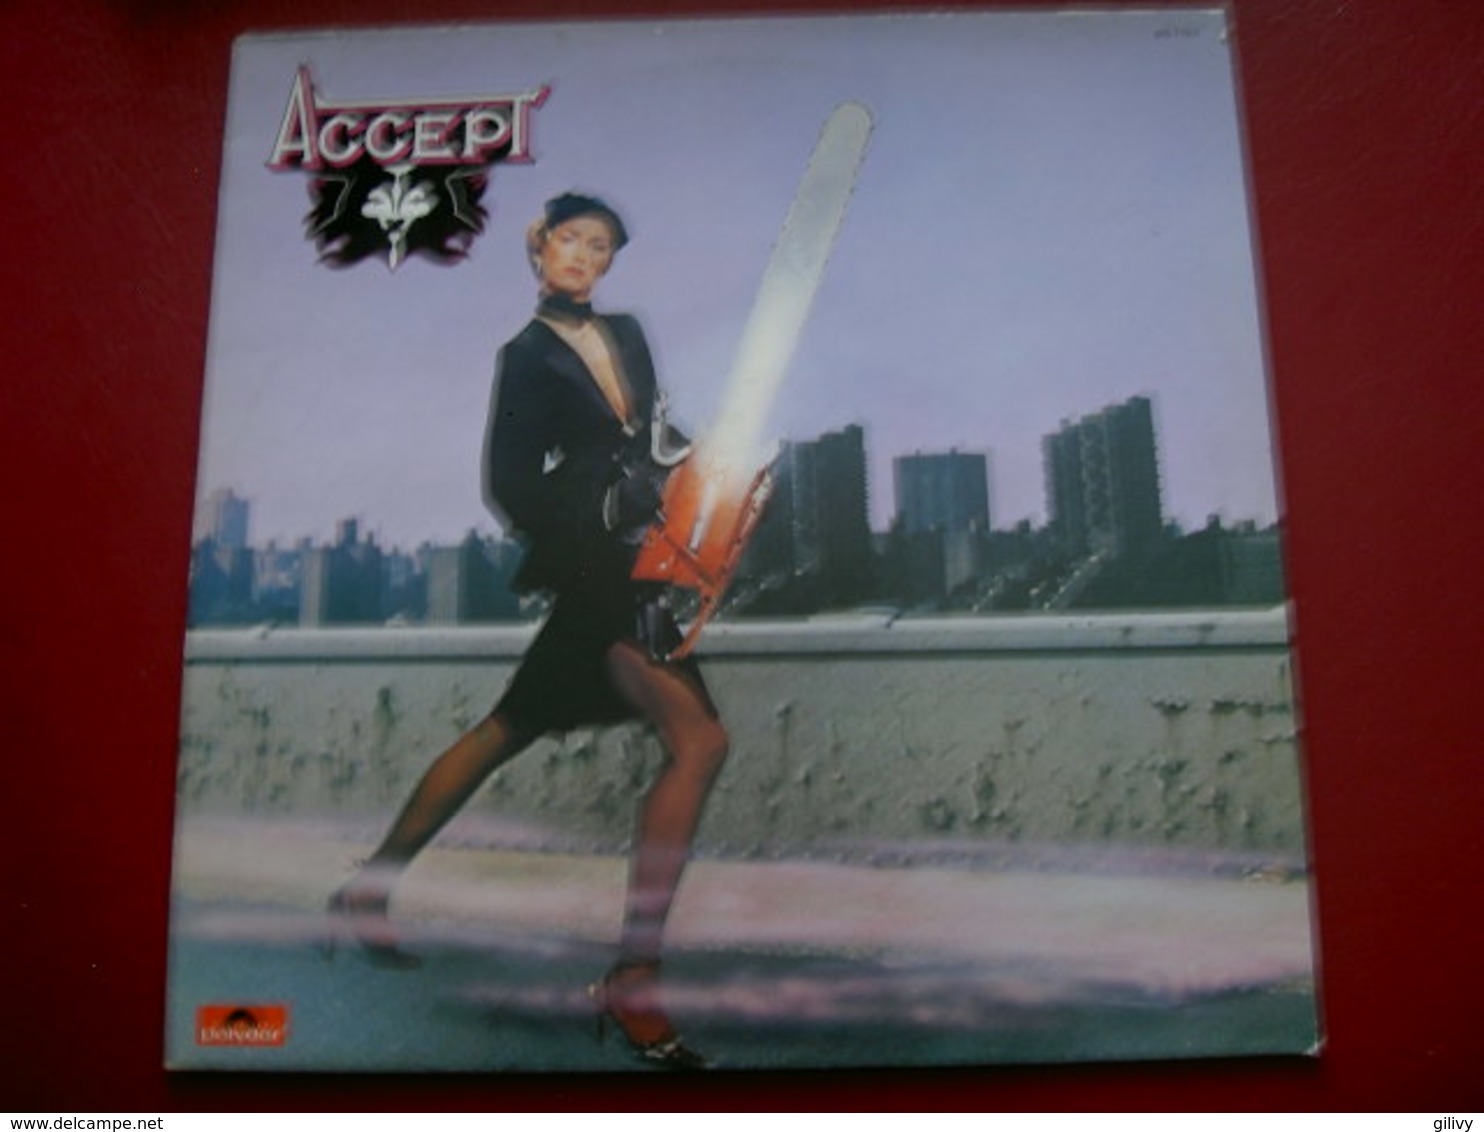 ACCEPT - Accept - Hard Rock & Metal